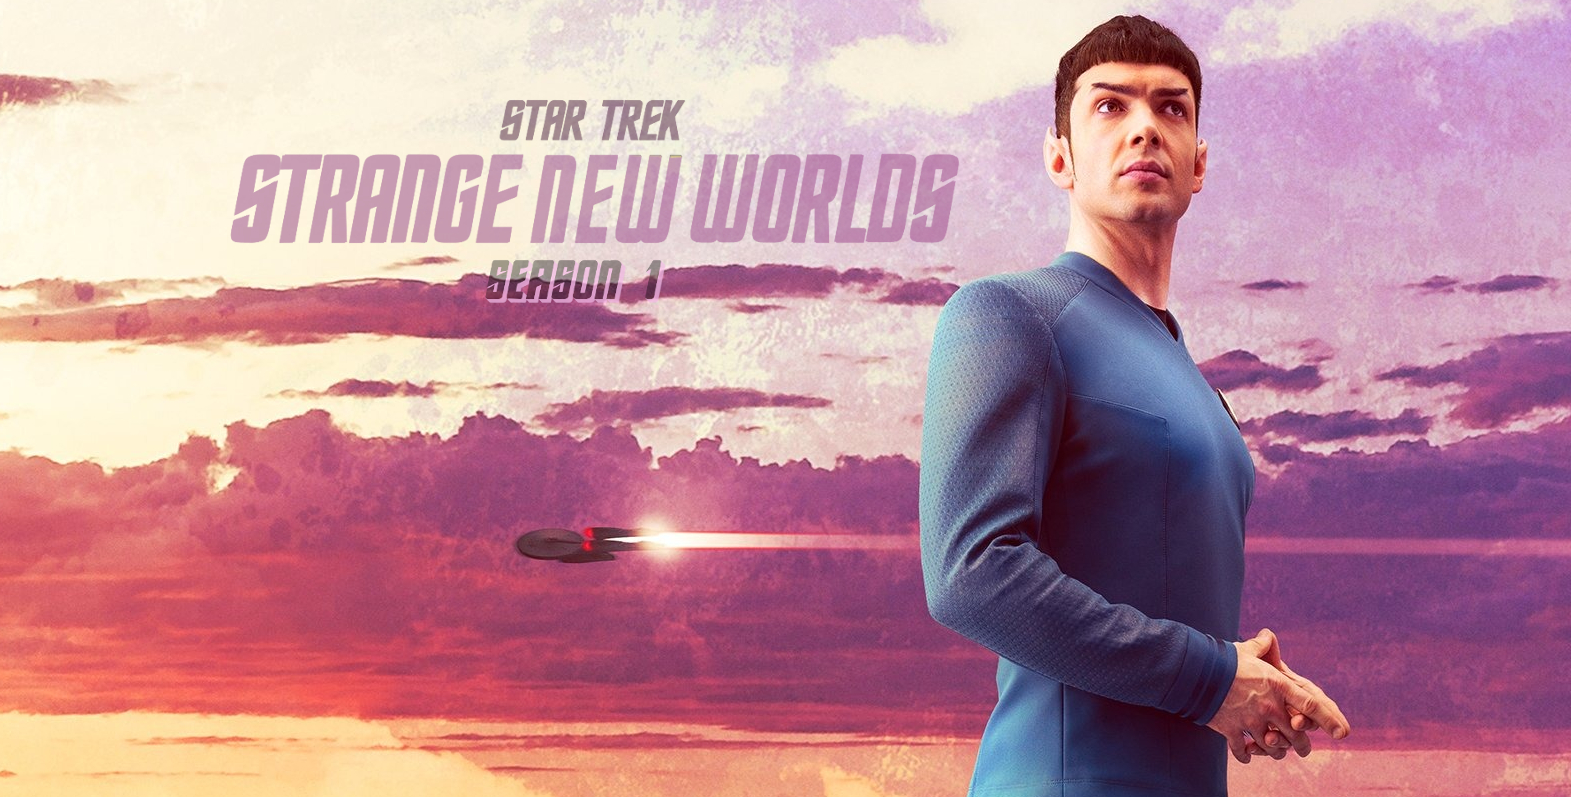 Rezension: Star Trek: Strange New Worlds 1x05 - "Spock Amok" 44